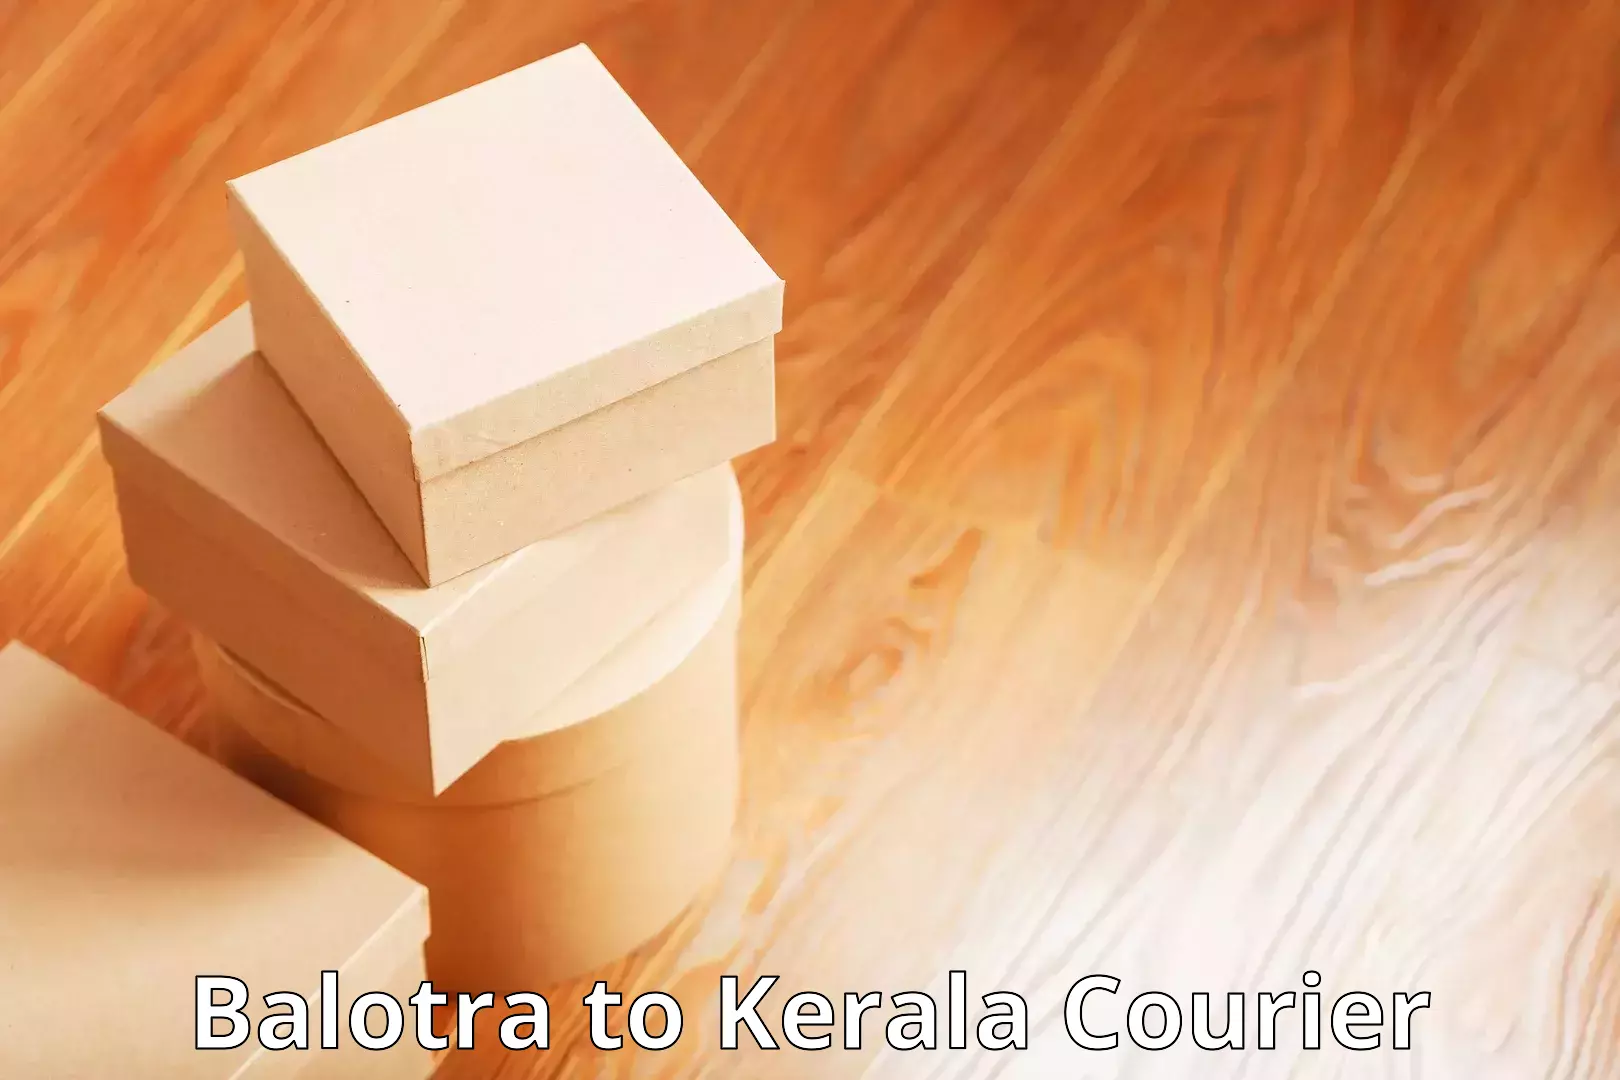 Logistics service provider Balotra to Kerala